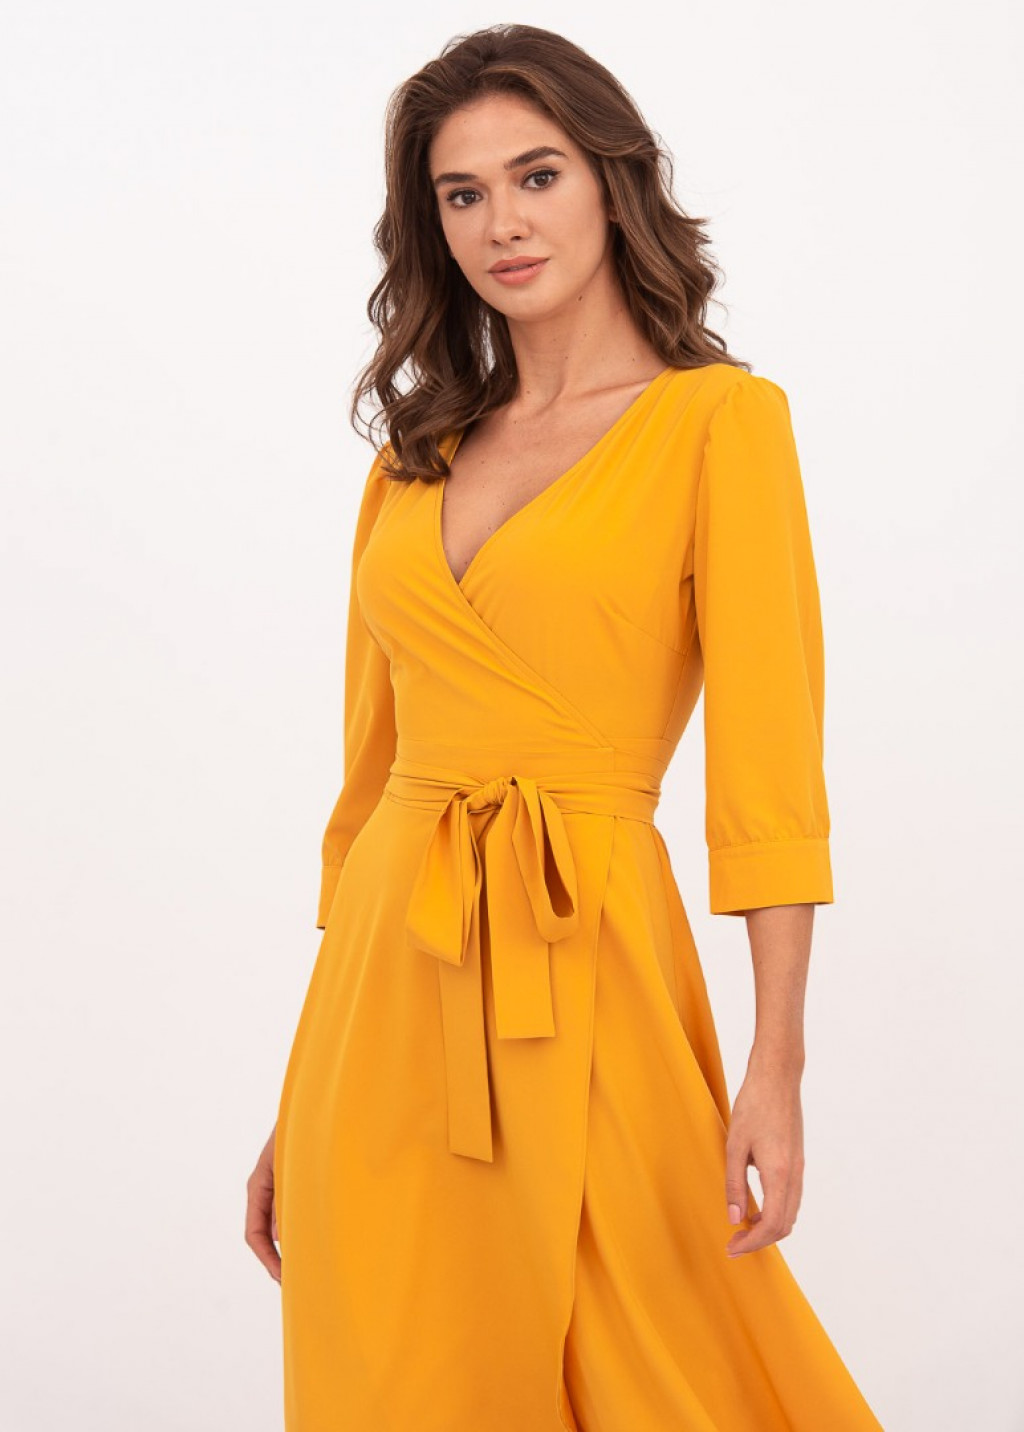 Honey yellow wrap dress